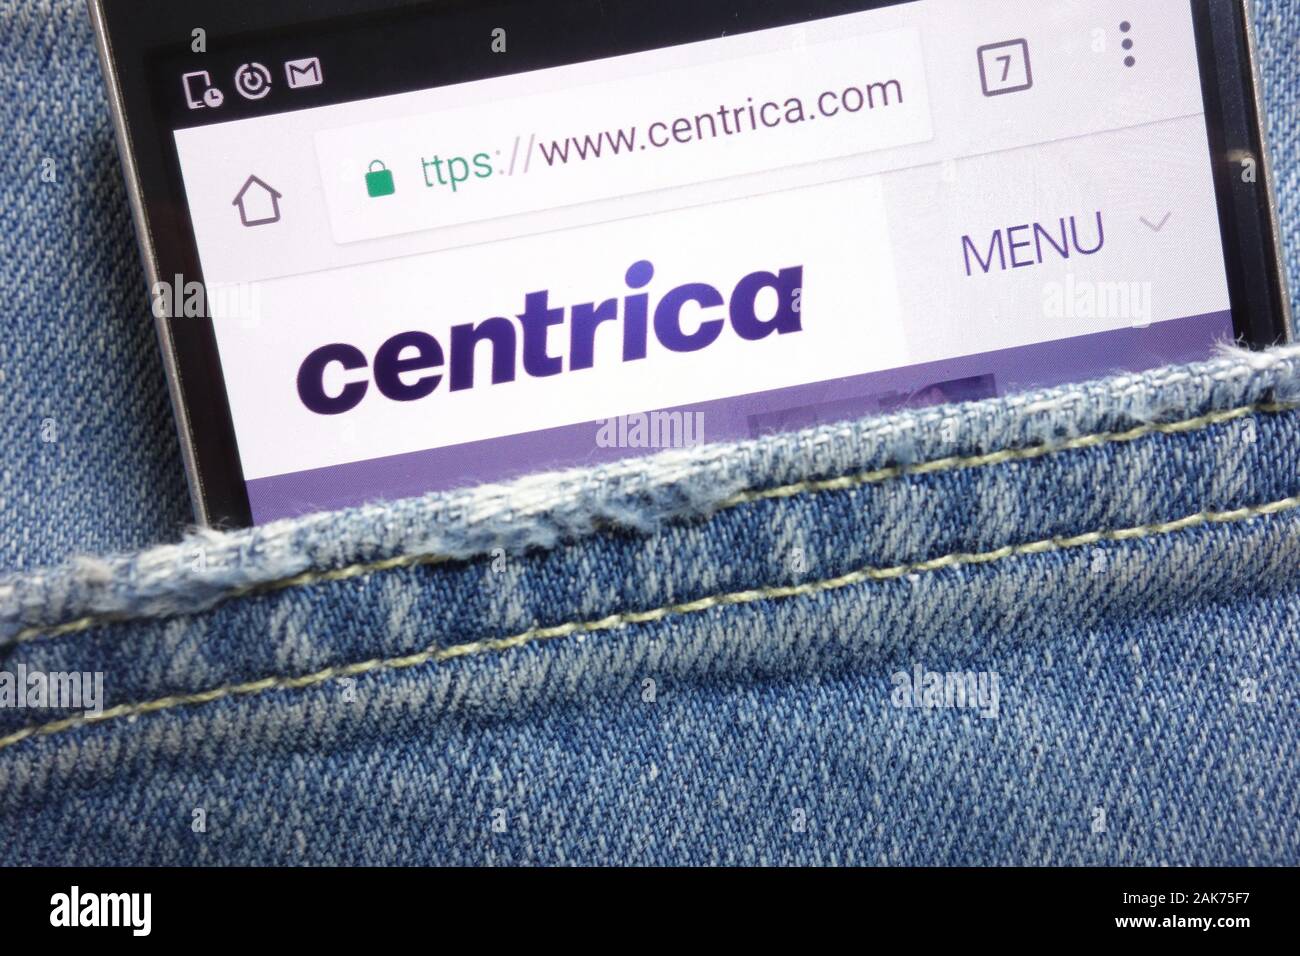 Centrica website displayed on smartphone hidden in jeans pocket Stock Photo